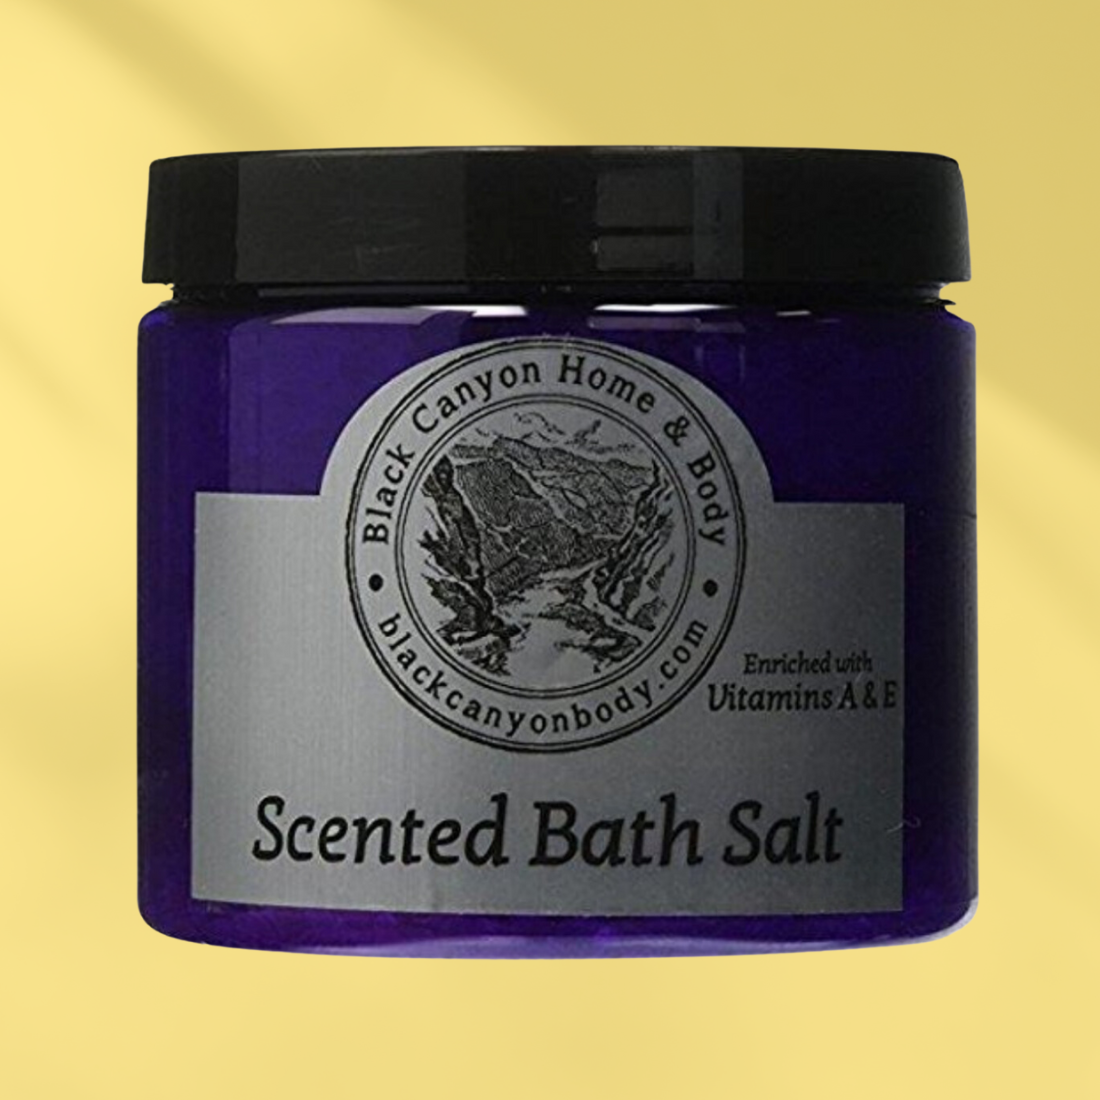 Black Canyon Blackberry & Fir Scented Sea Salt Bath Soak